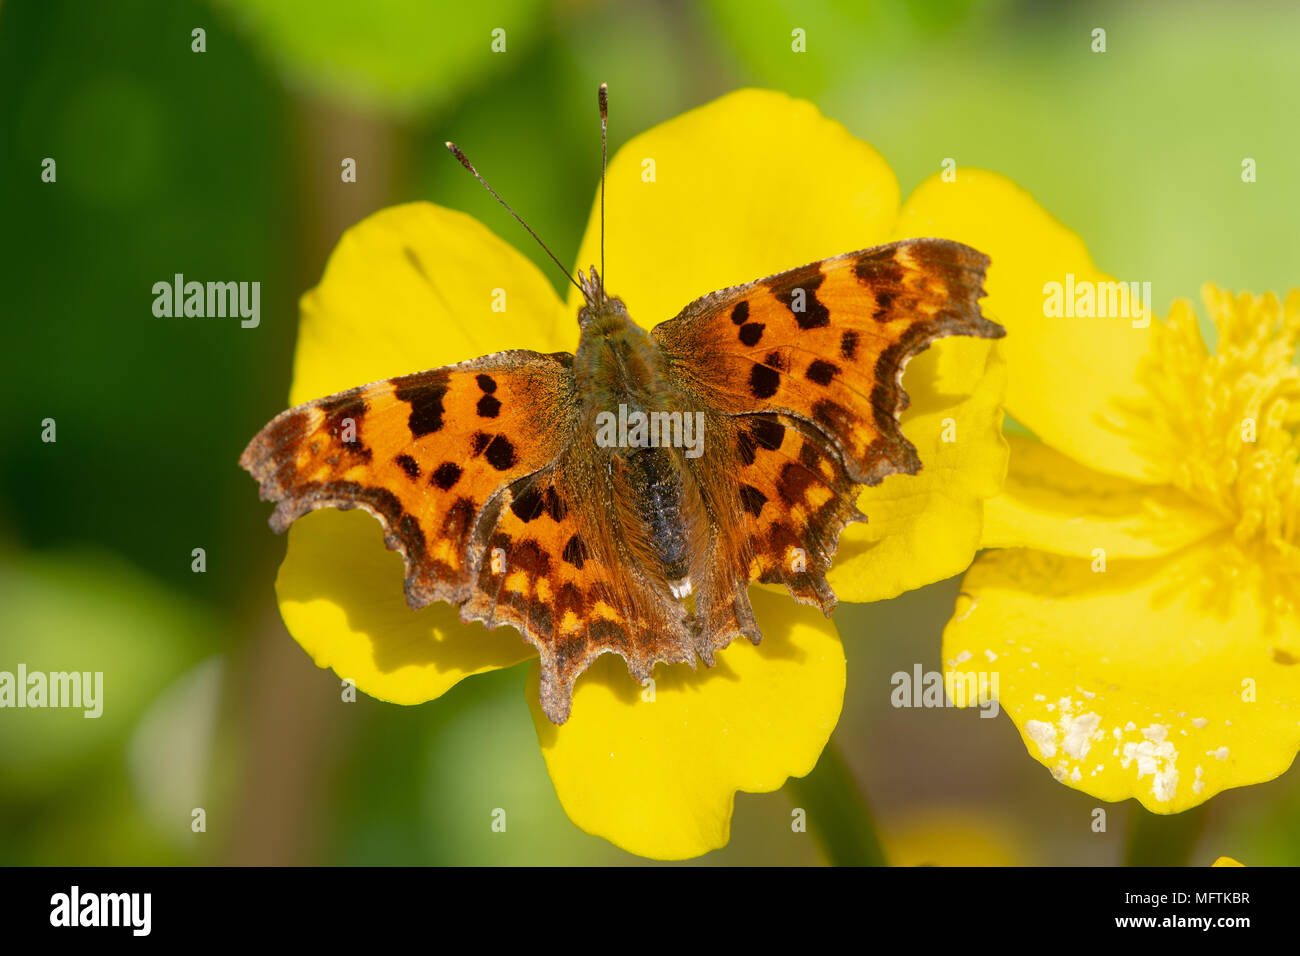 Coma (Polygonia c-album) en Marsh marigold. Mariposa de la familia Nymphalidae, alimentándose de Caltha palustris, aka kingcup Foto de stock